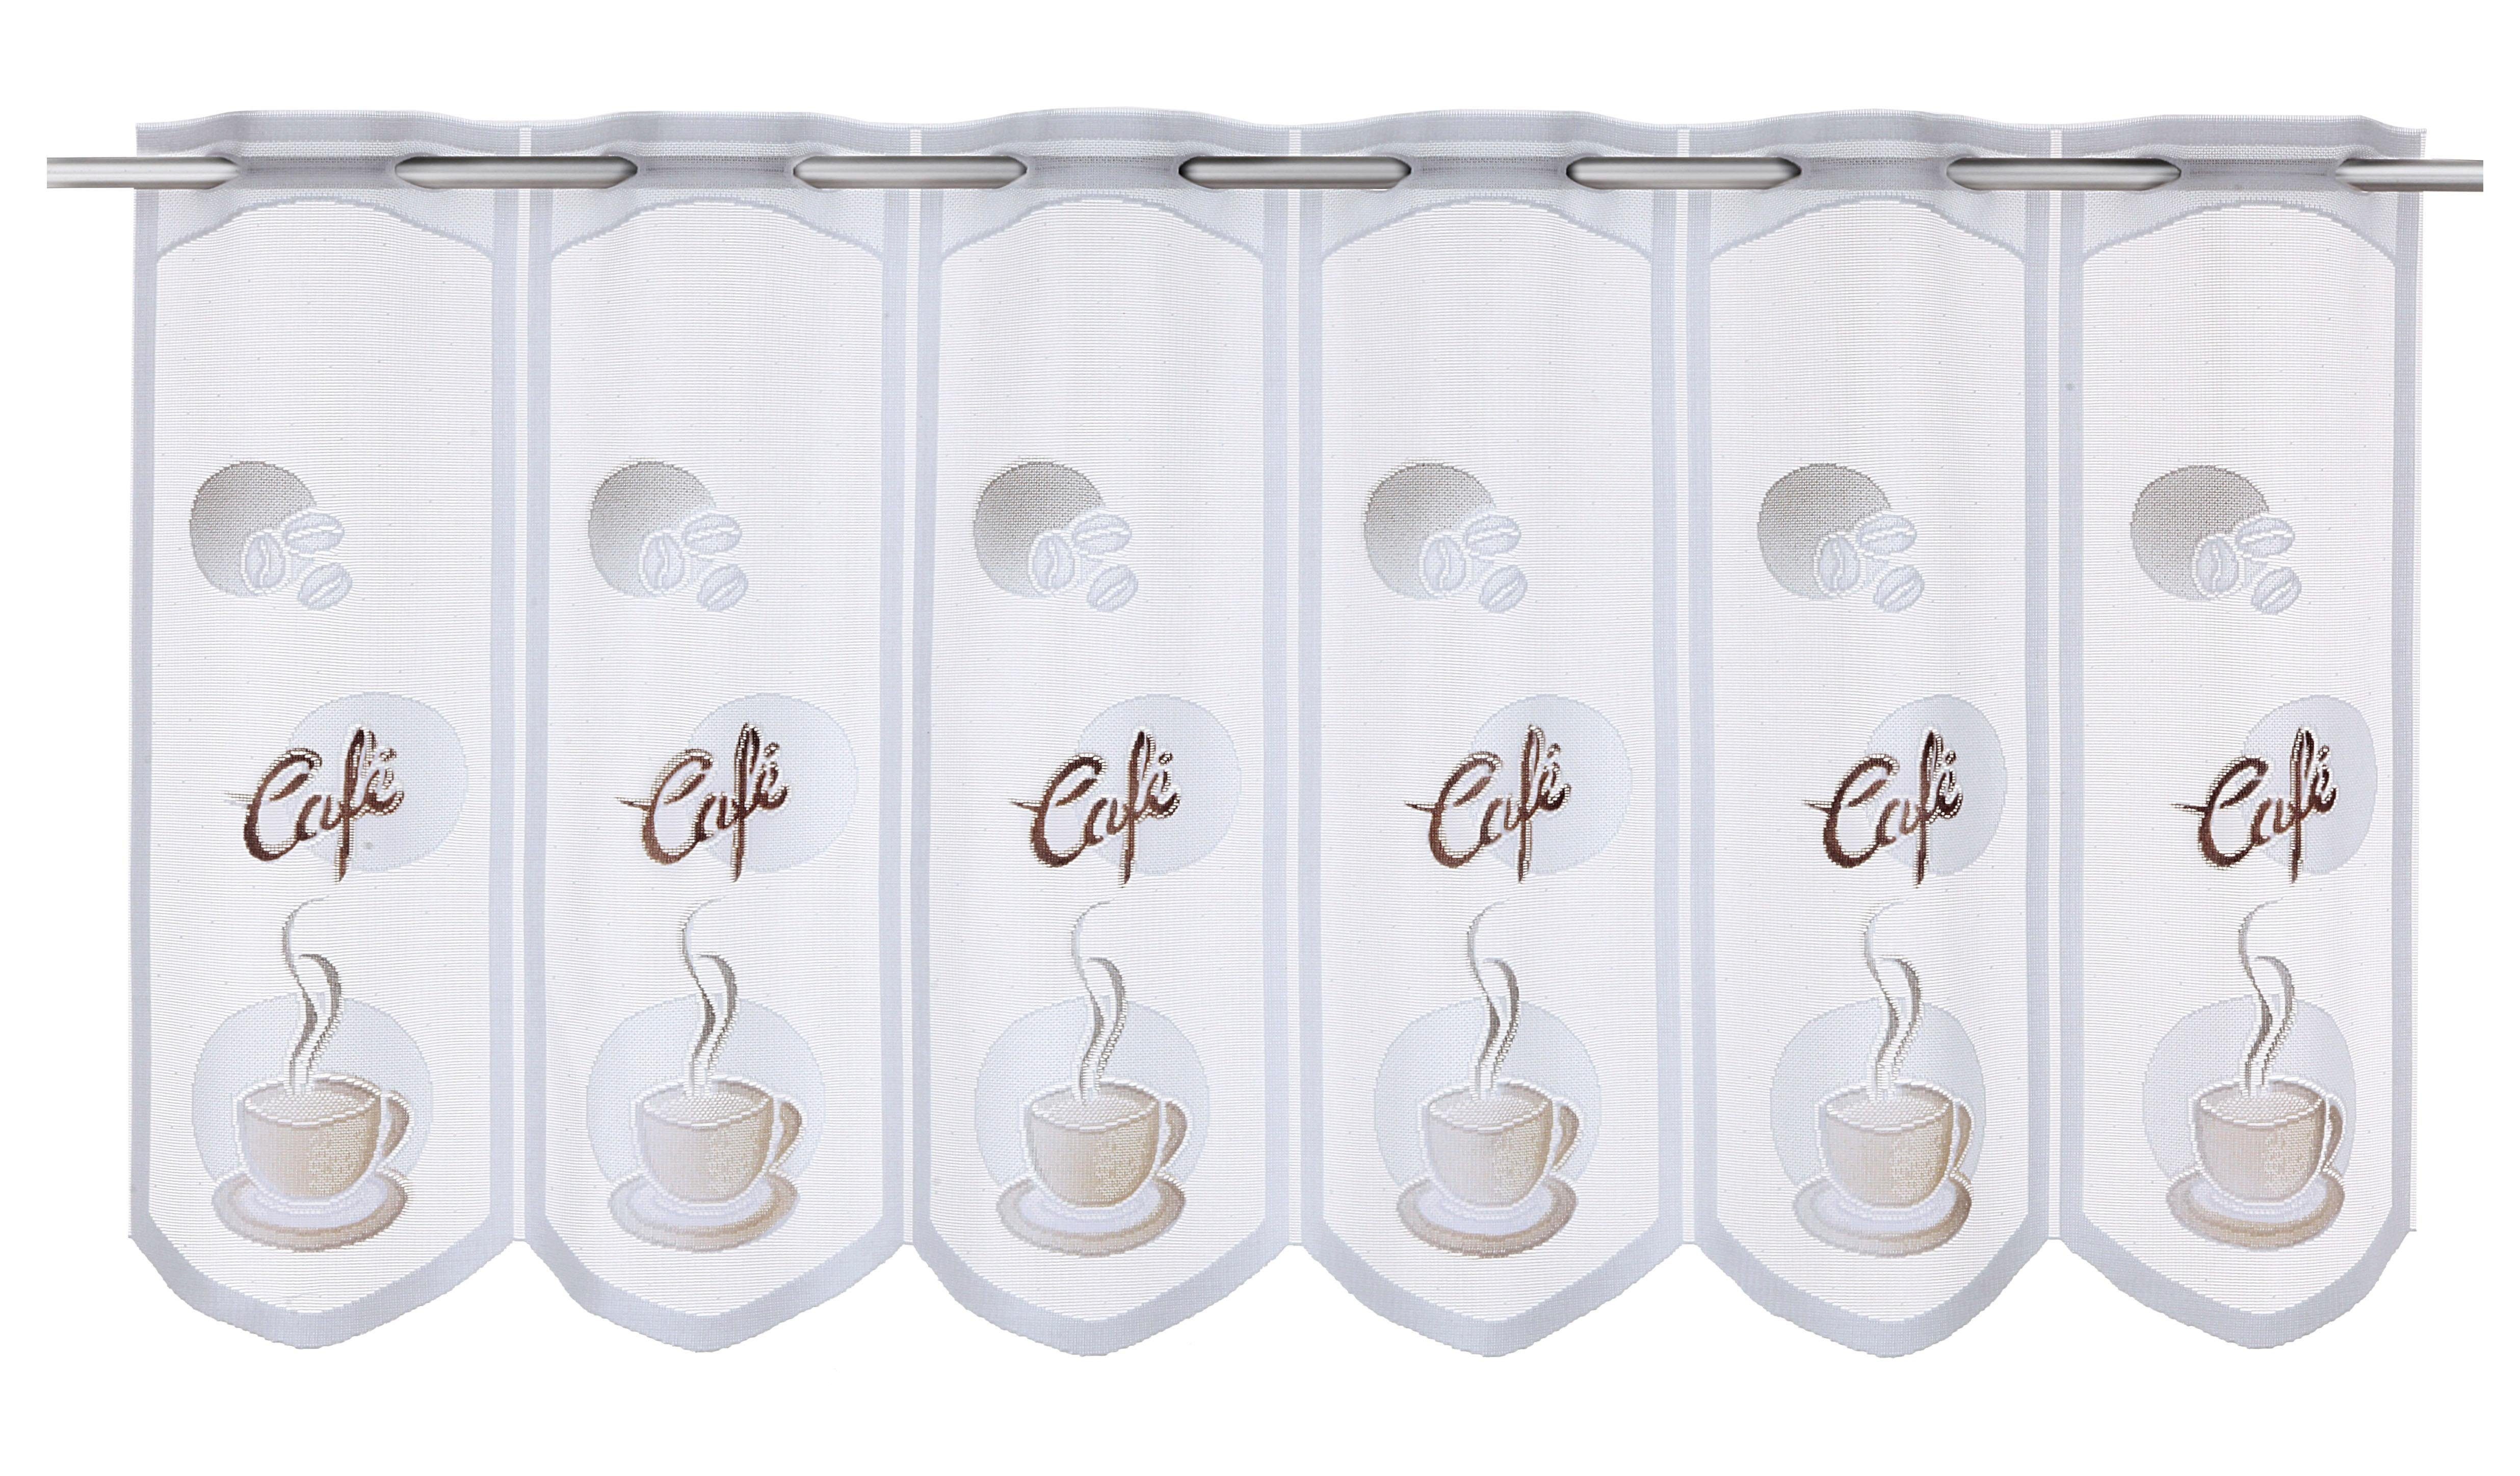 WILLKOMMEN ZUHAUSE by GROUP Panneaux Koffie Jacquard pannaux (1 stuk) online bestellen | OTTO